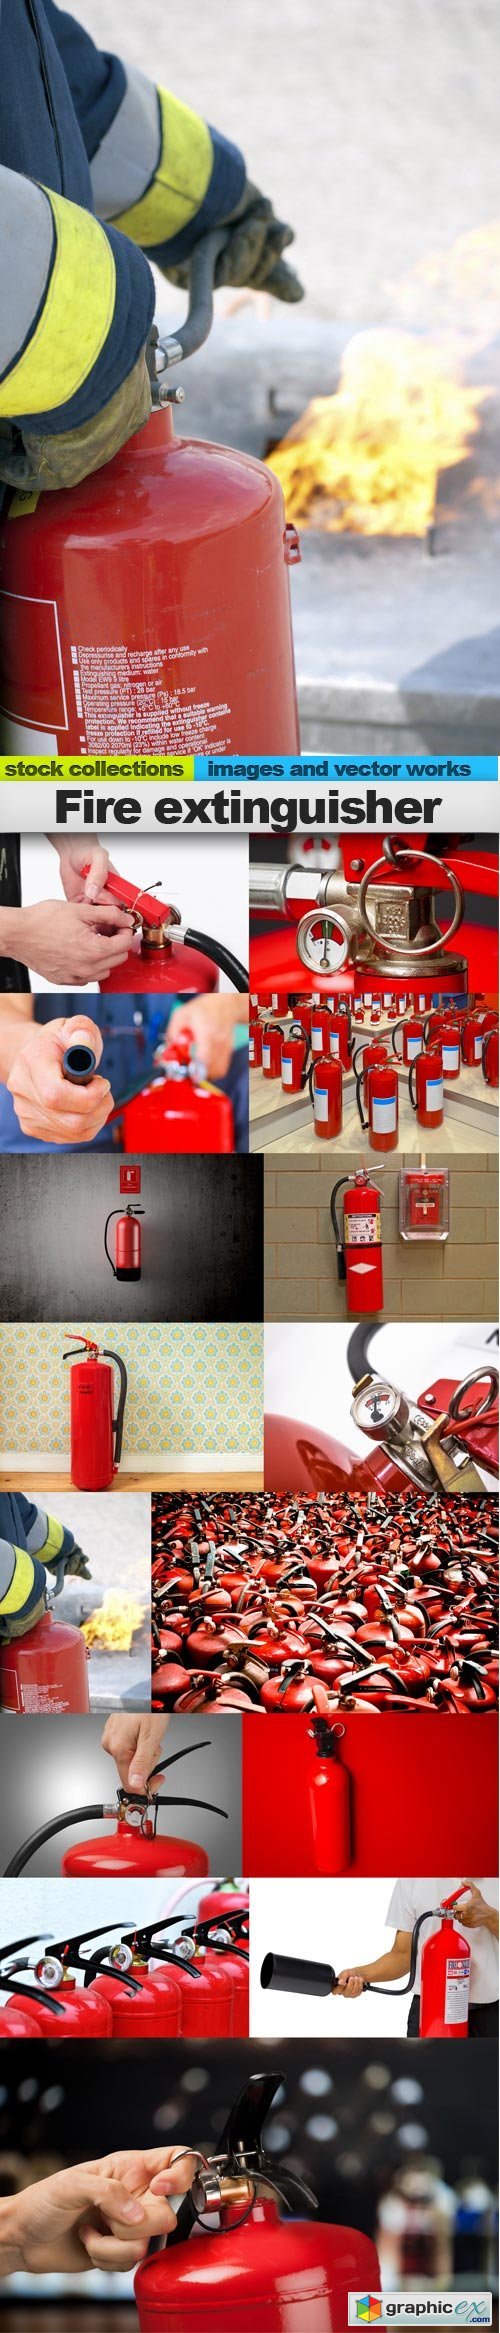 Fire extinguisher, 15 x UHQ JPEG